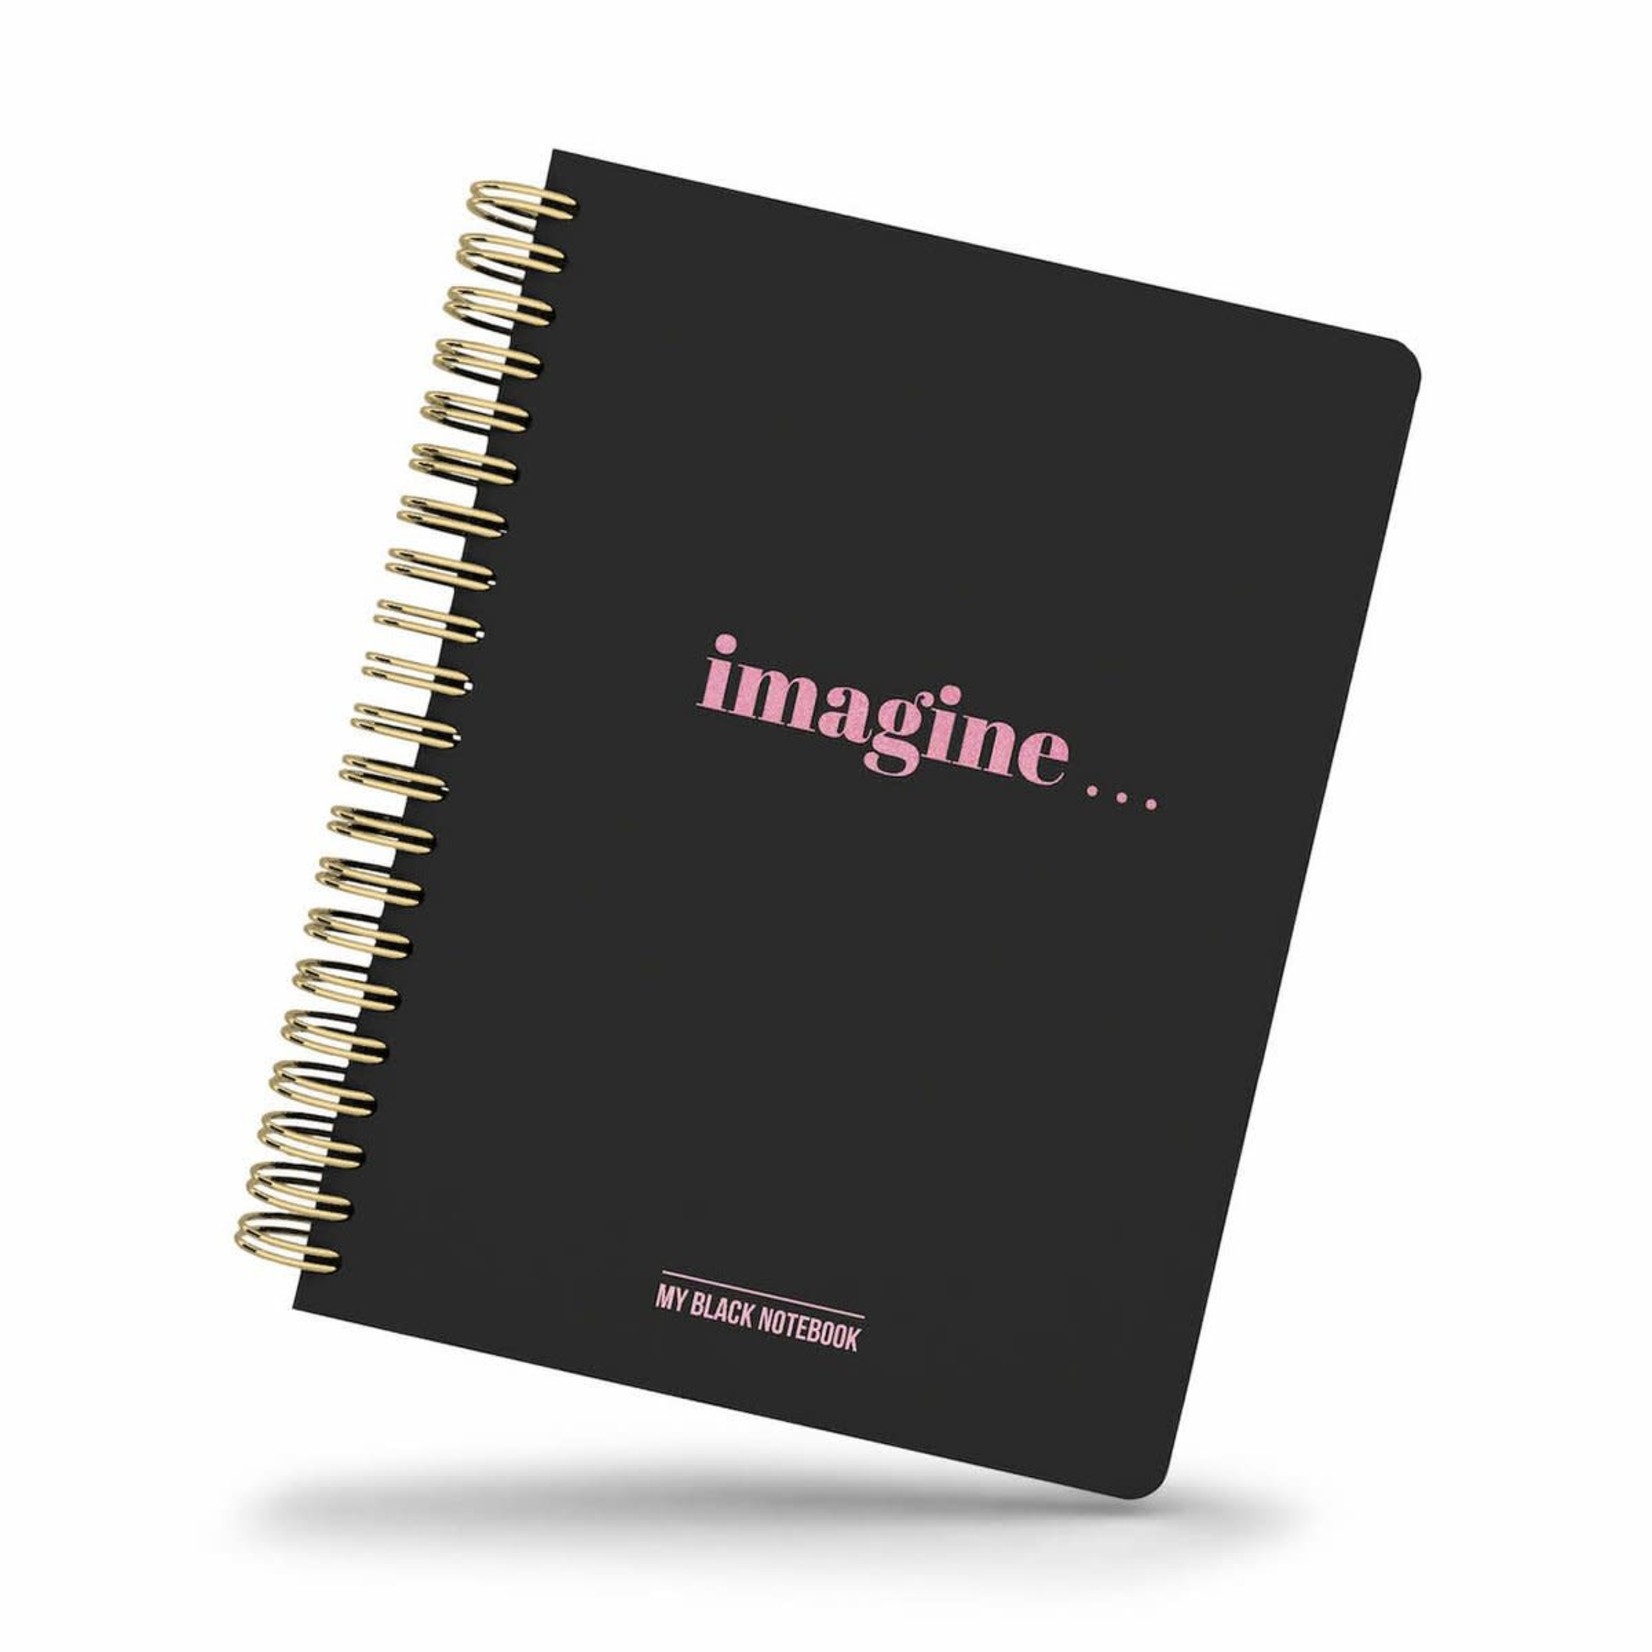 My Black Notebook - Imagine